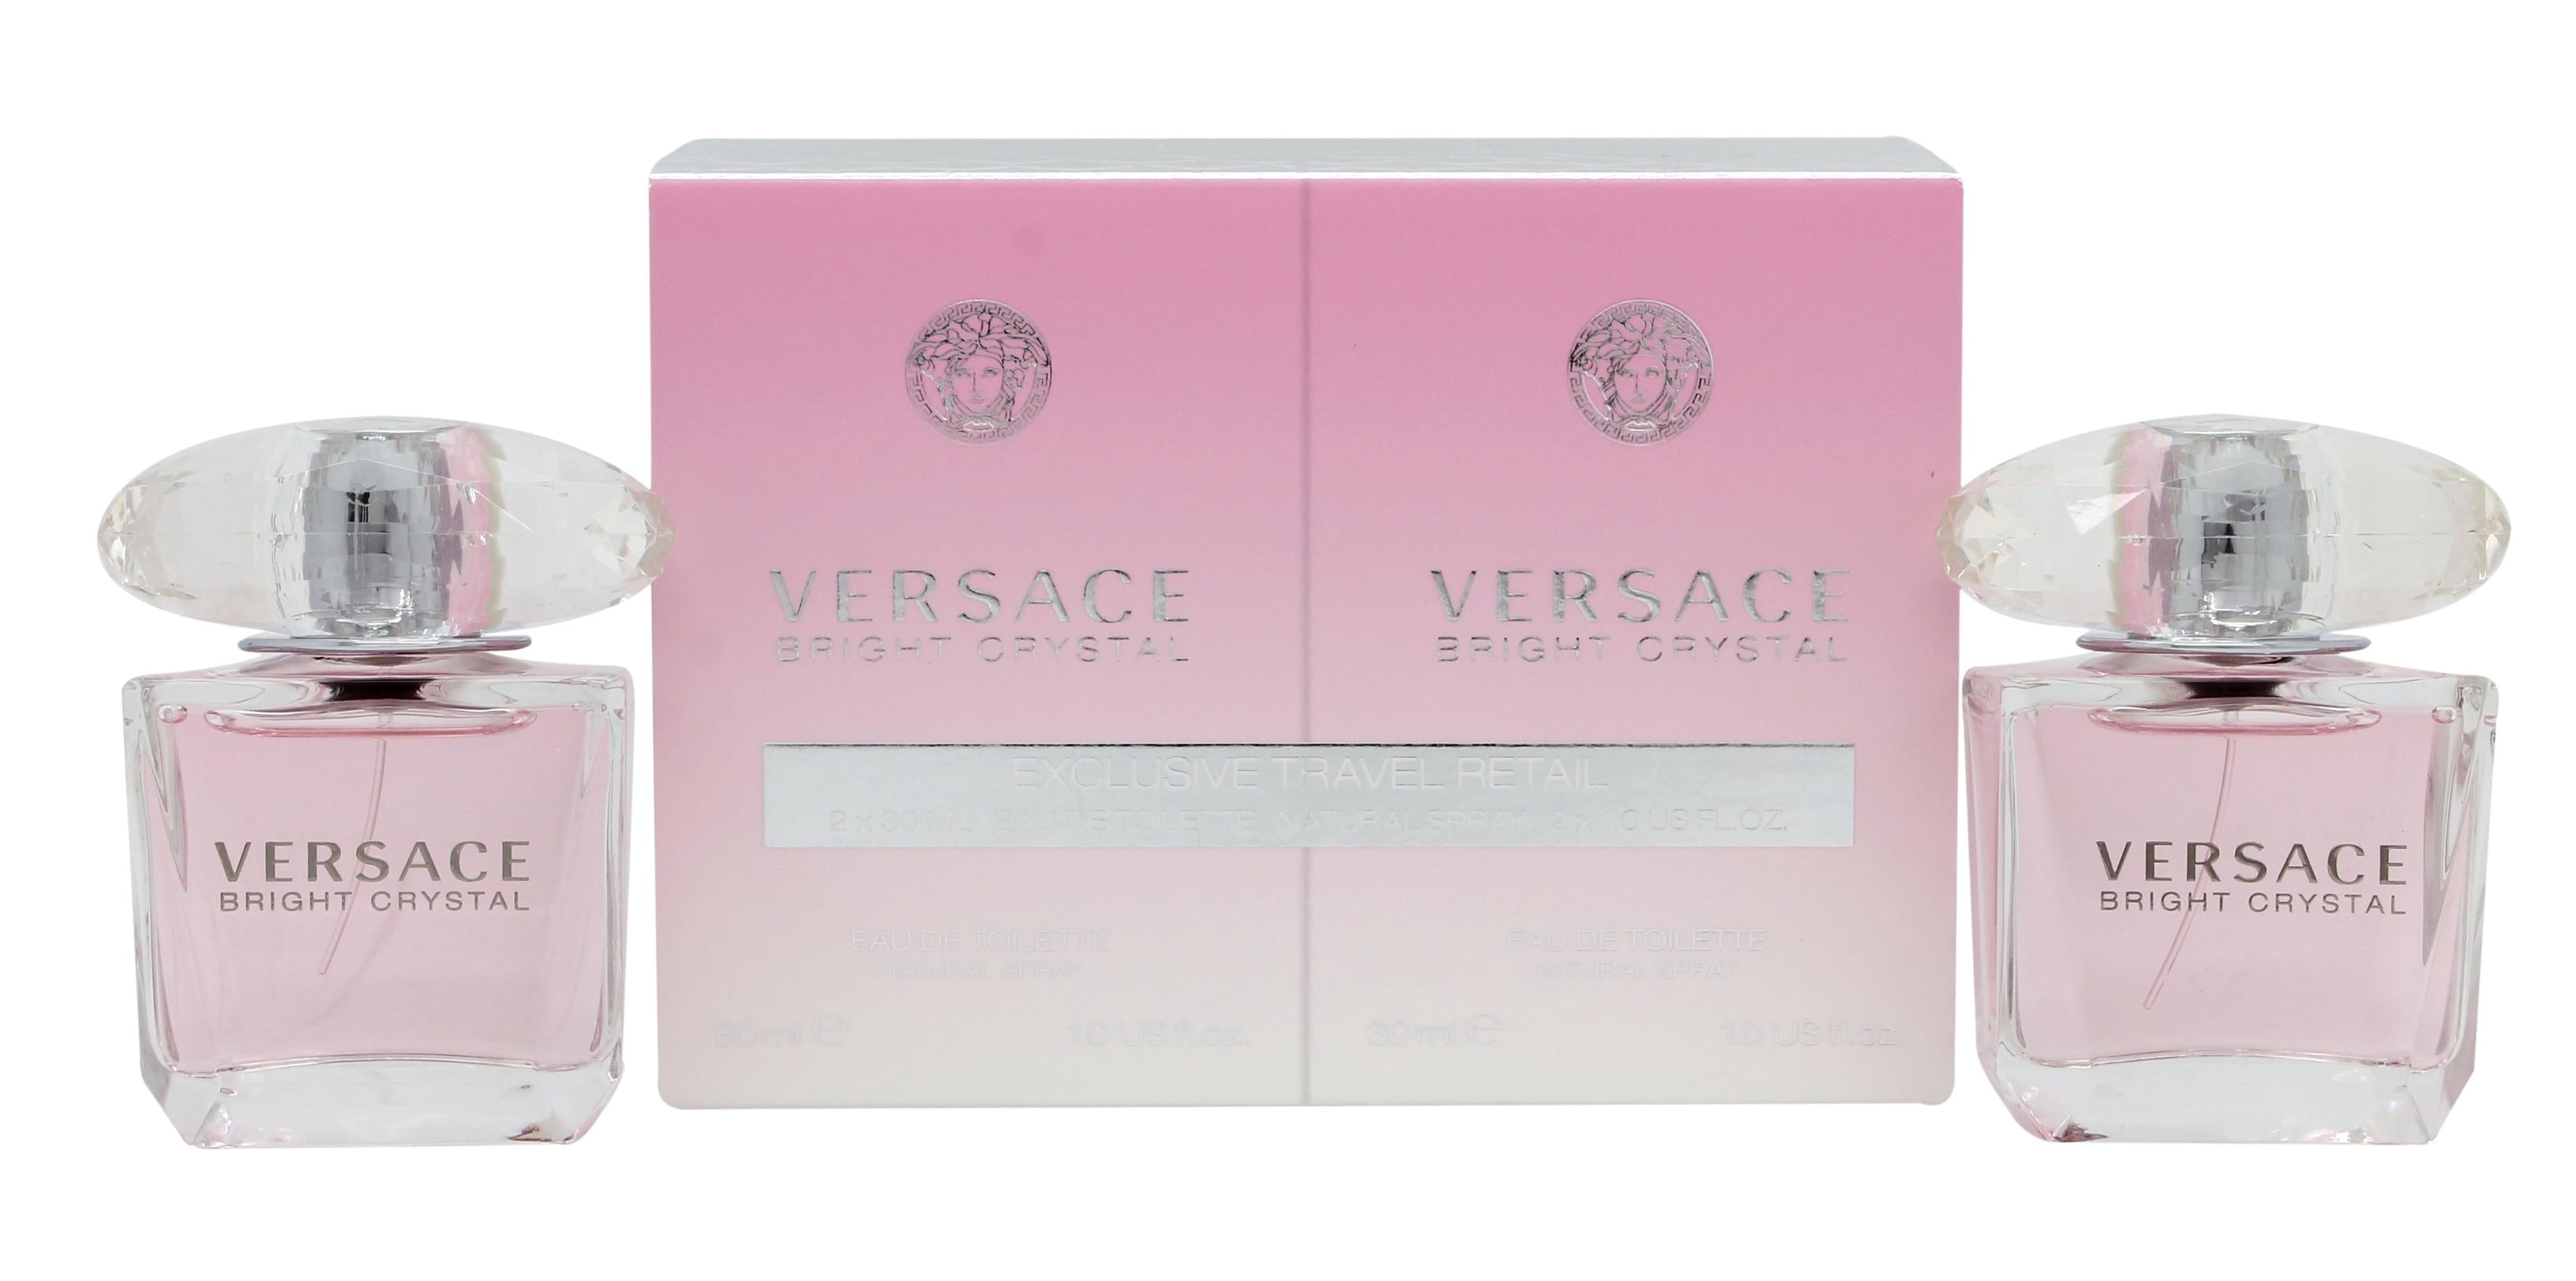 View Versace Bright Crystal Gift Set 2 x 30ml EDT Spray information